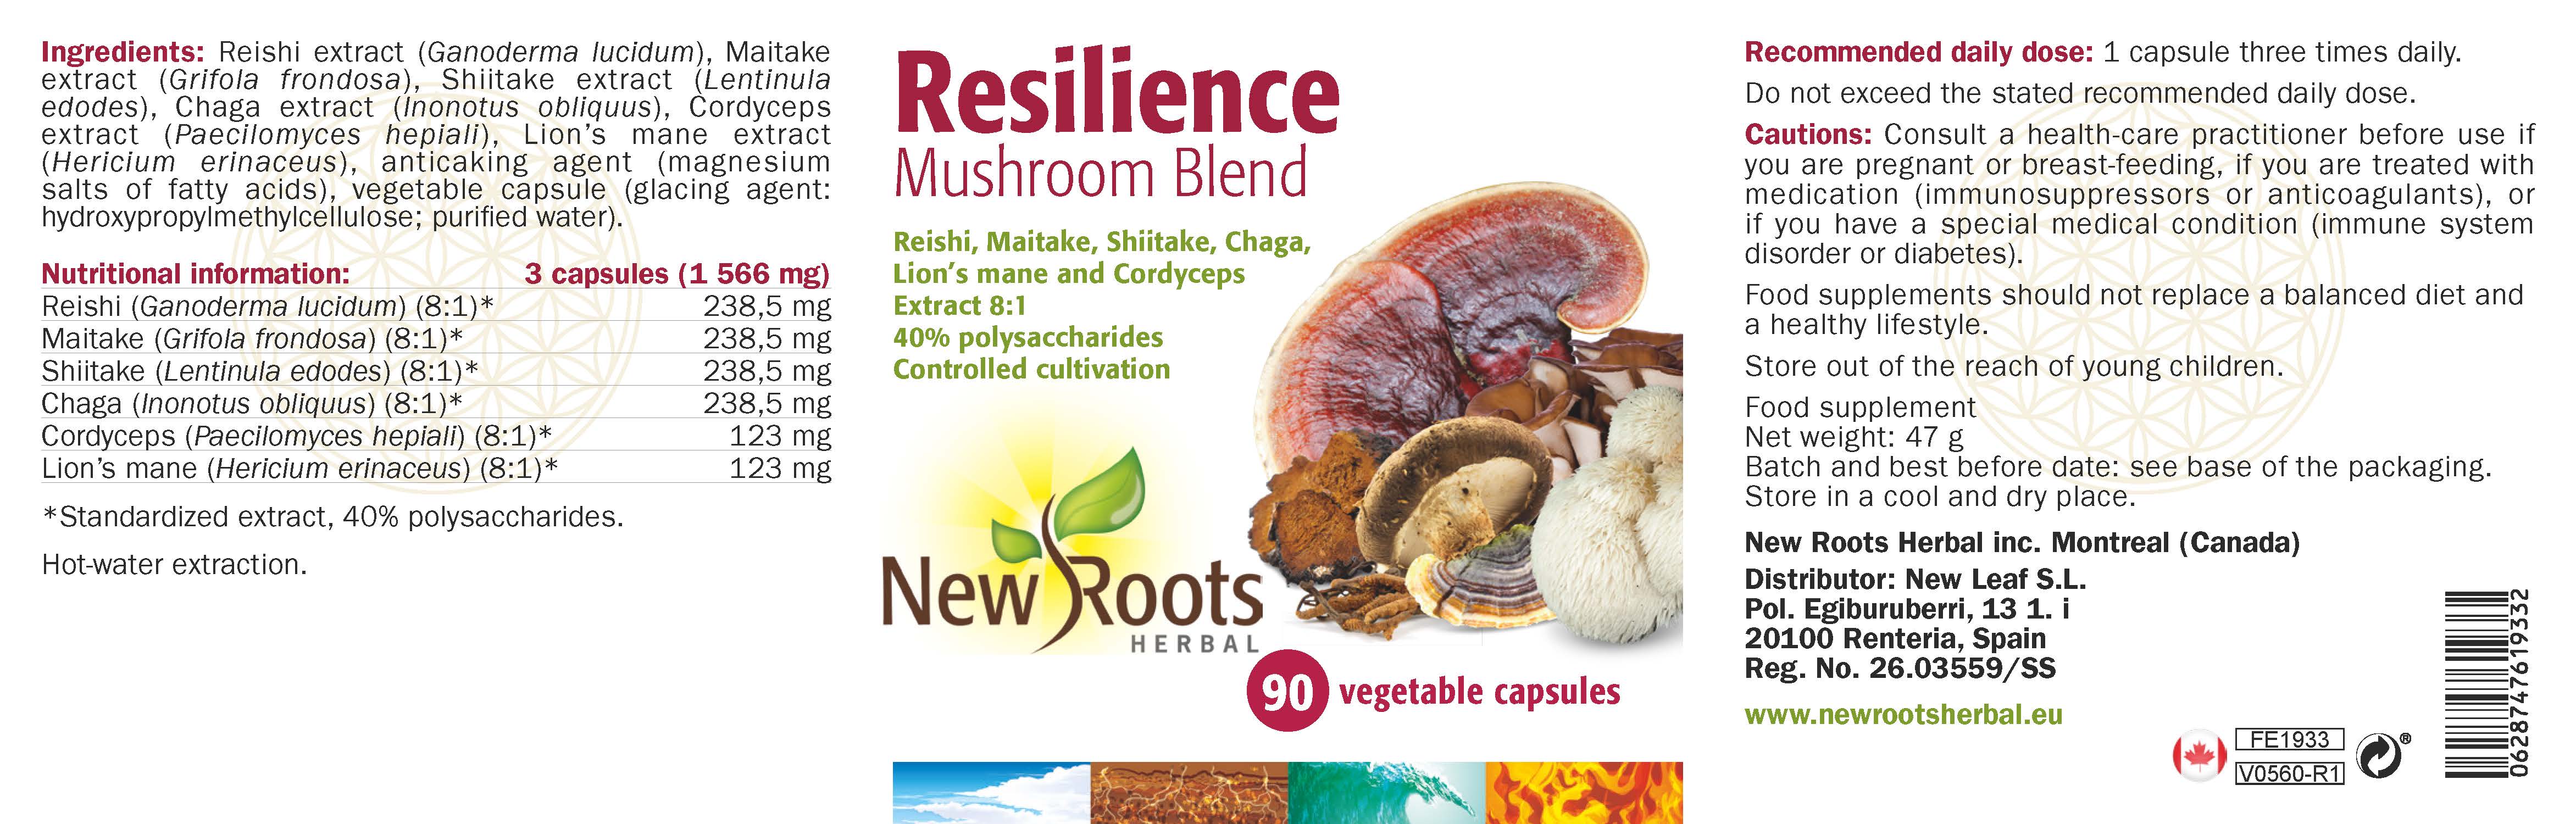 New Roots Herbal Resilience Mushroom Blend 90's